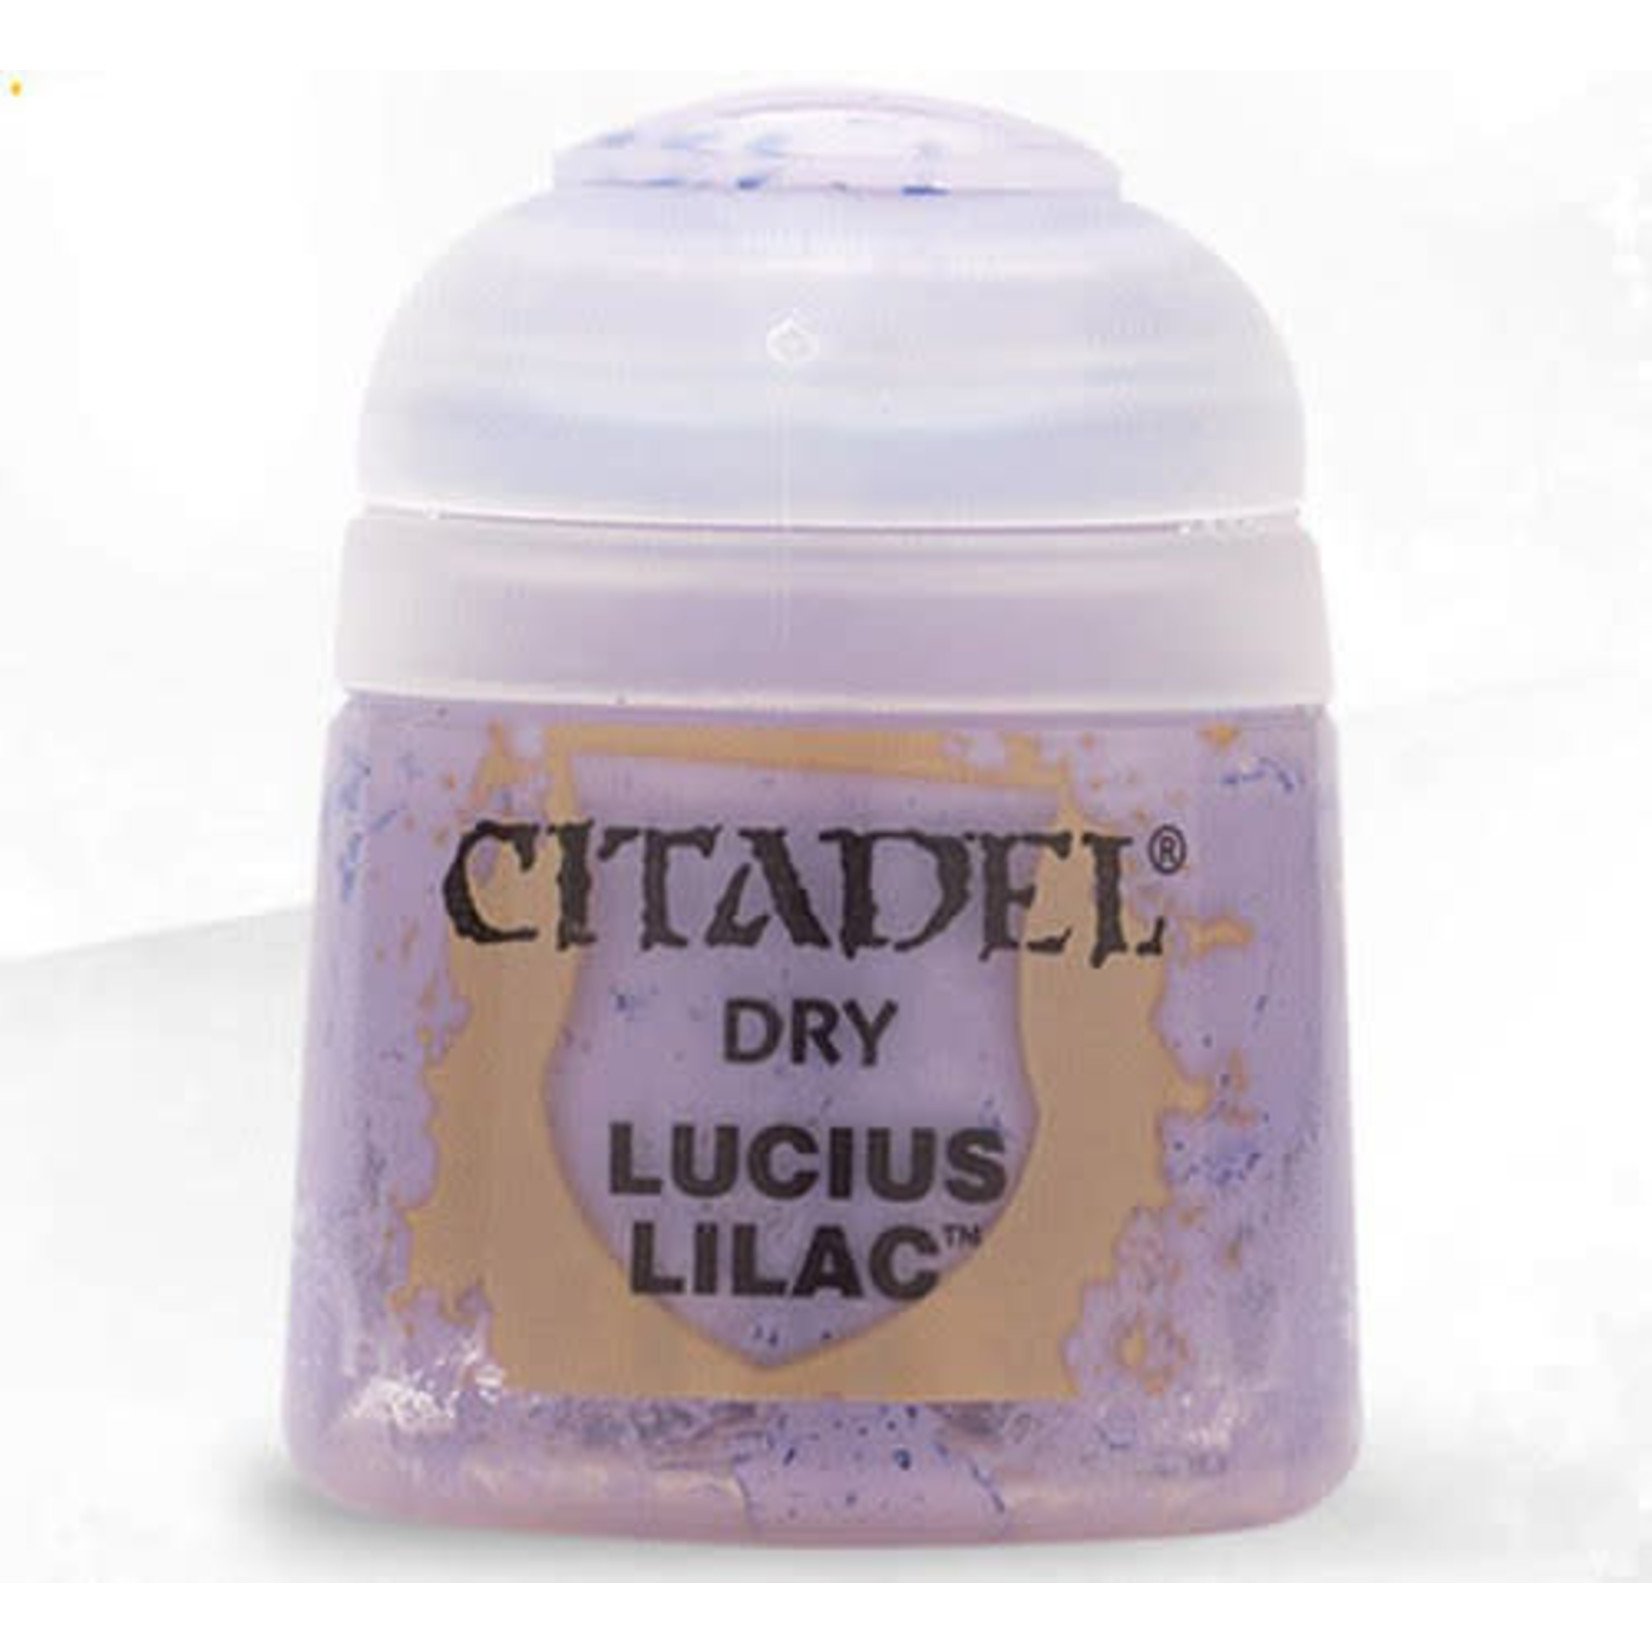 Citadel Citadel Paint - Dry: Lucius Lilac